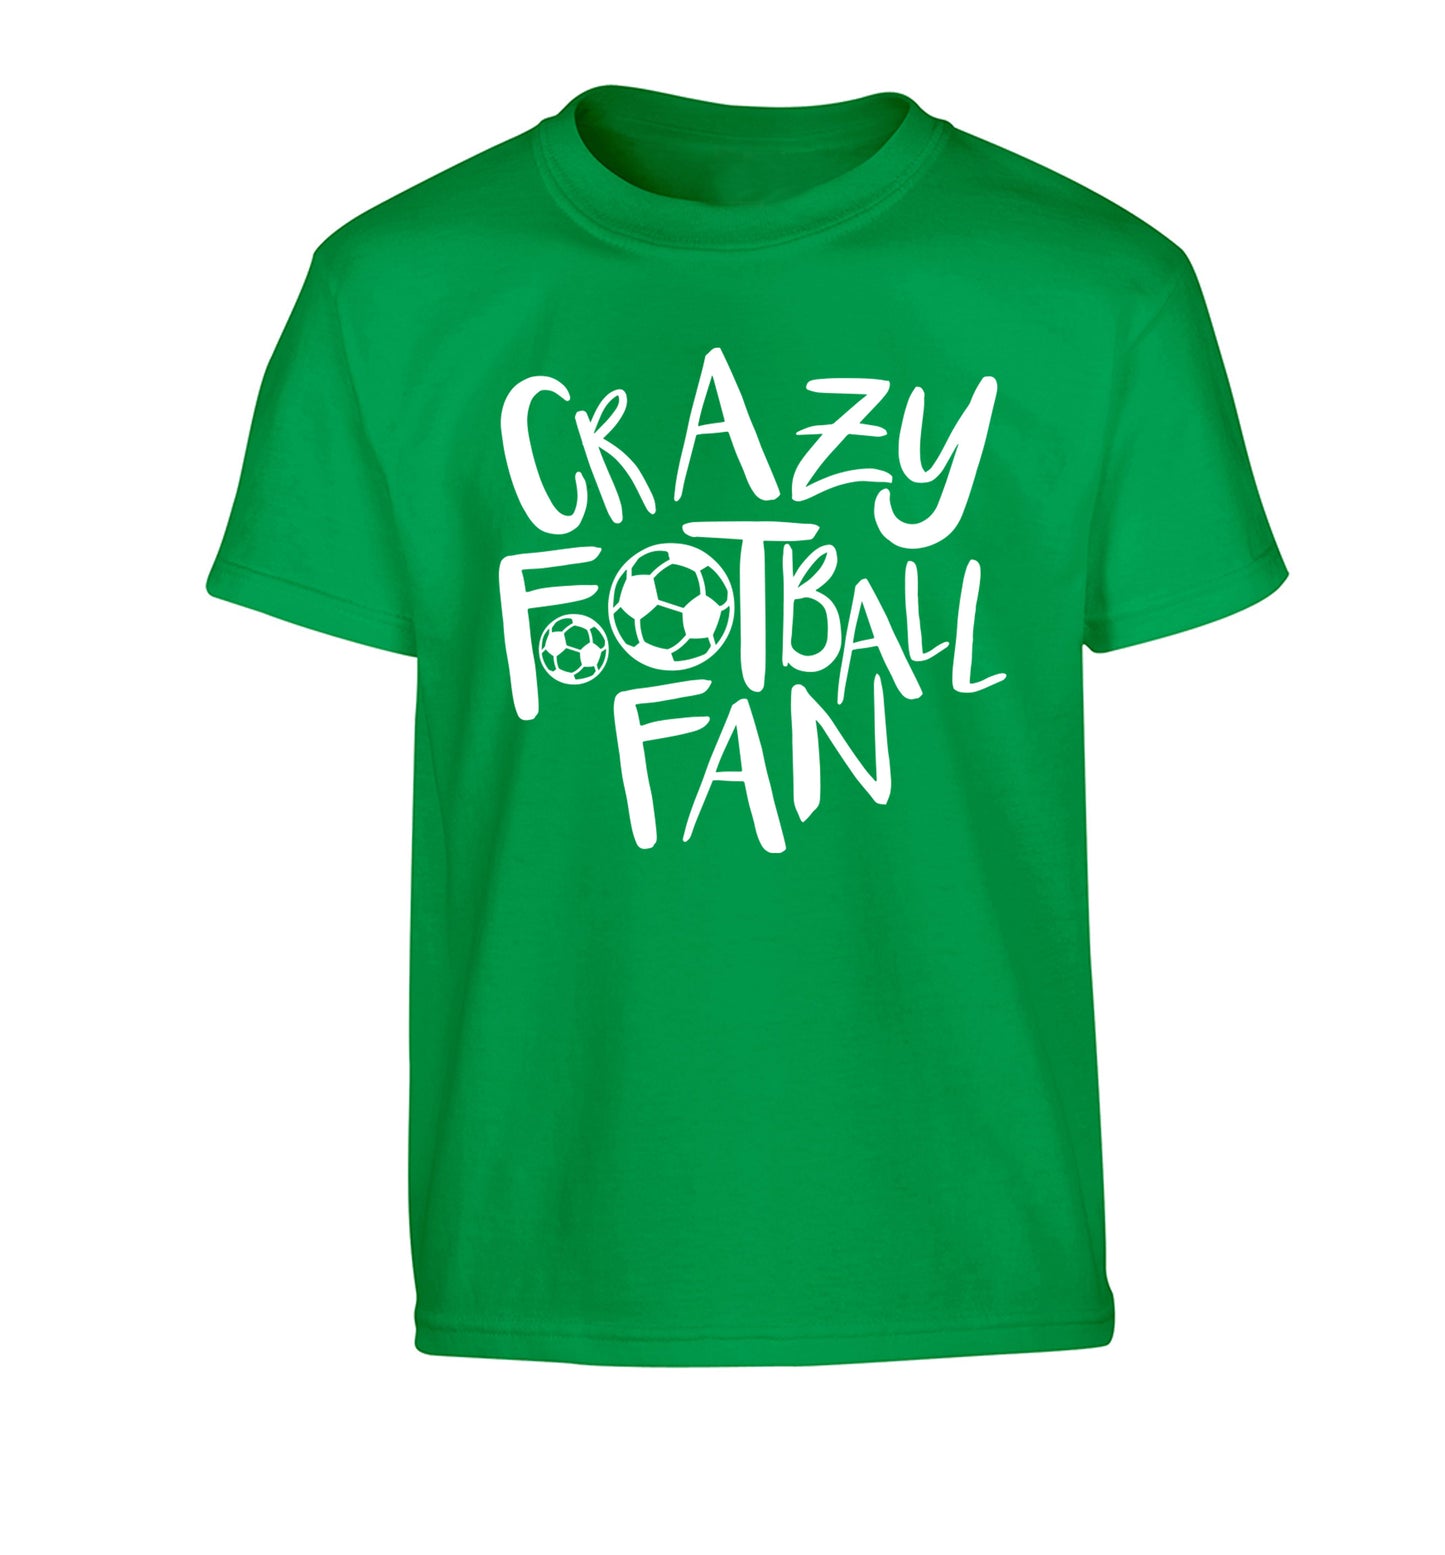 Crazy football fan Children's green Tshirt 12-14 Years